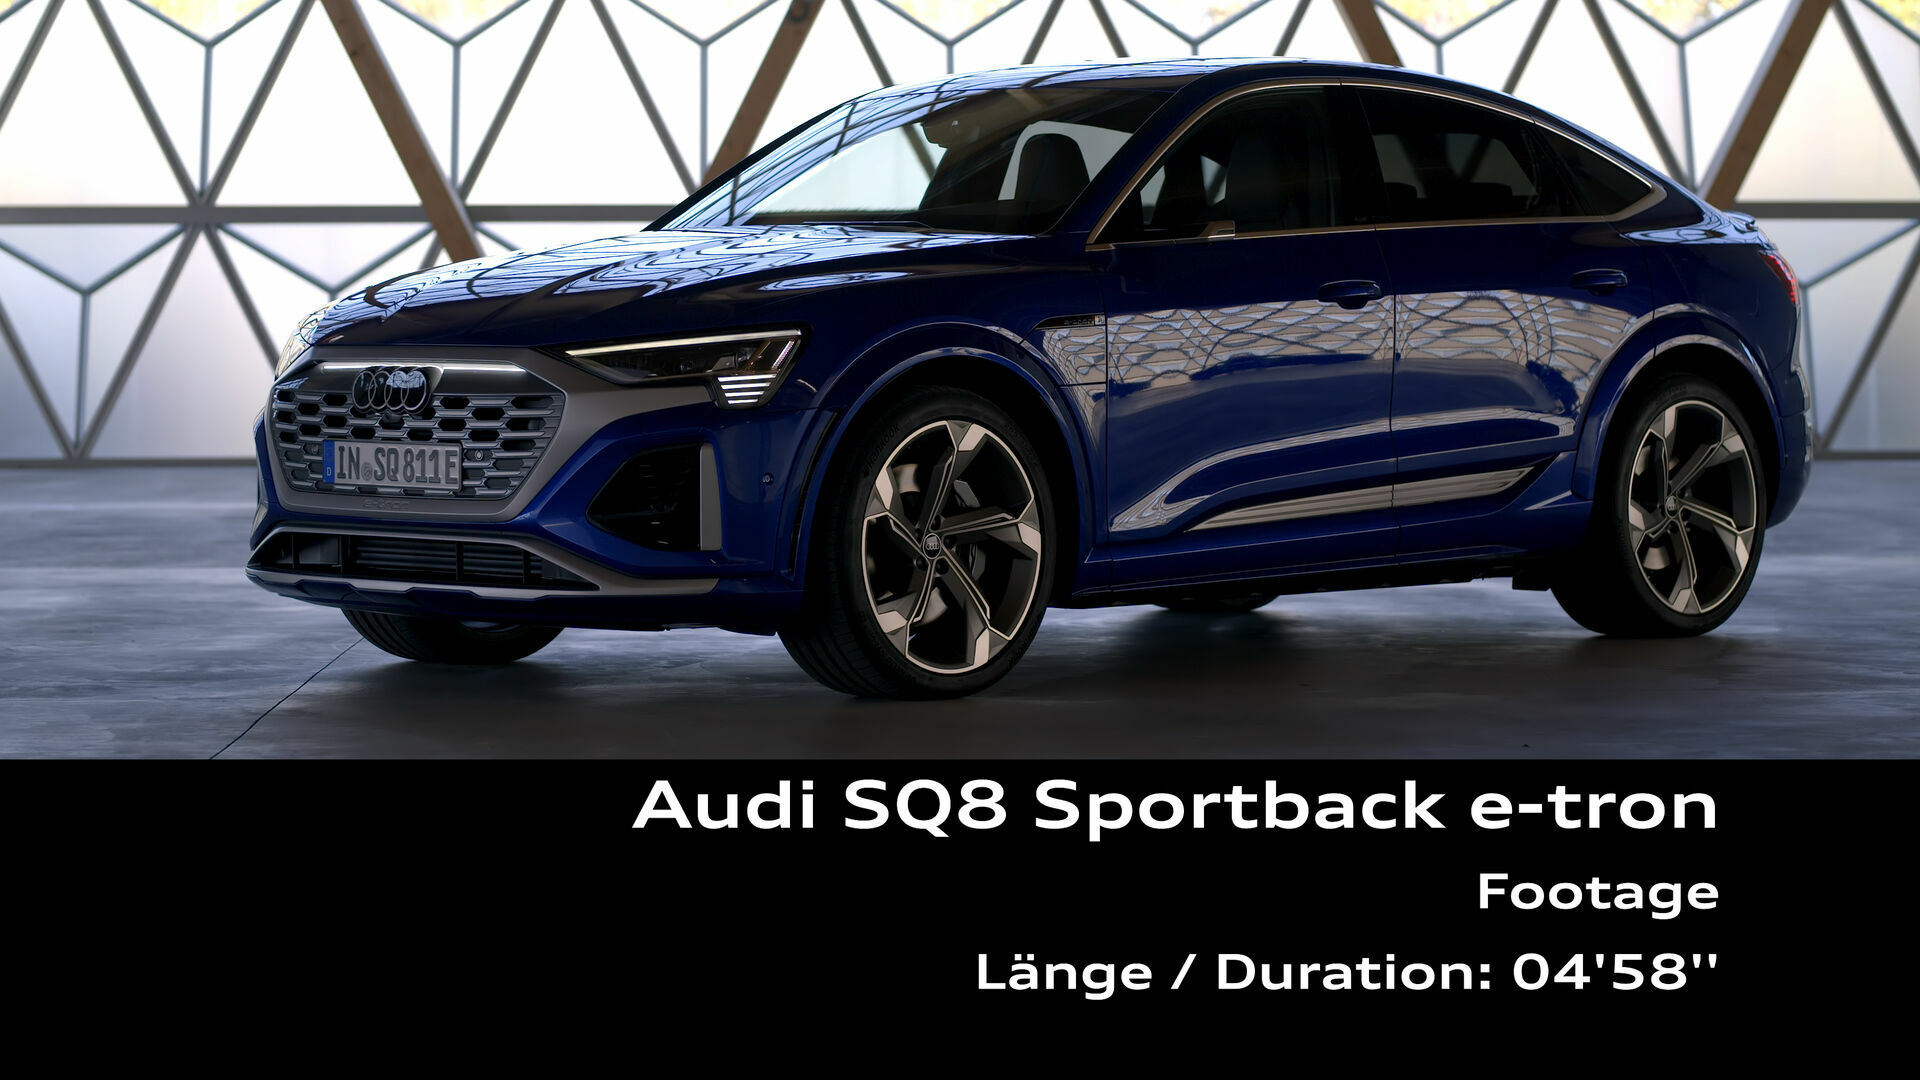 Footage: Audi SQ8 Sportback e-tron